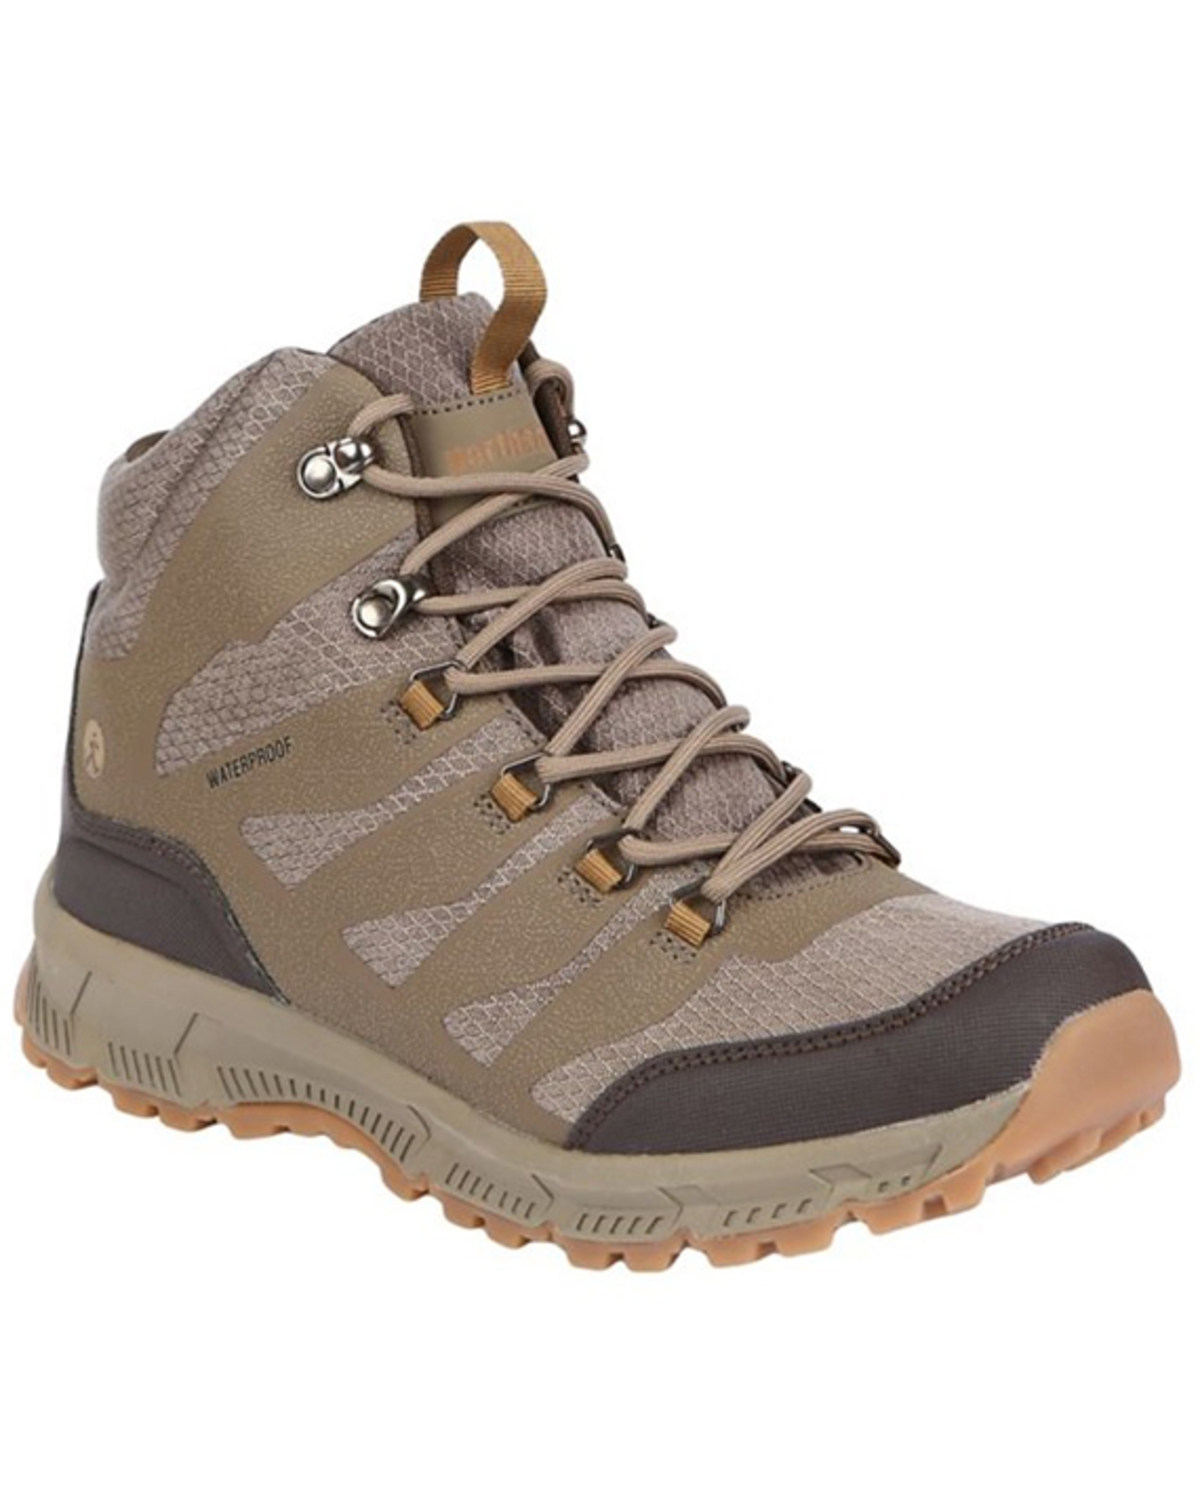 Northside Men's Hargrove Waterproof Hiking Boots